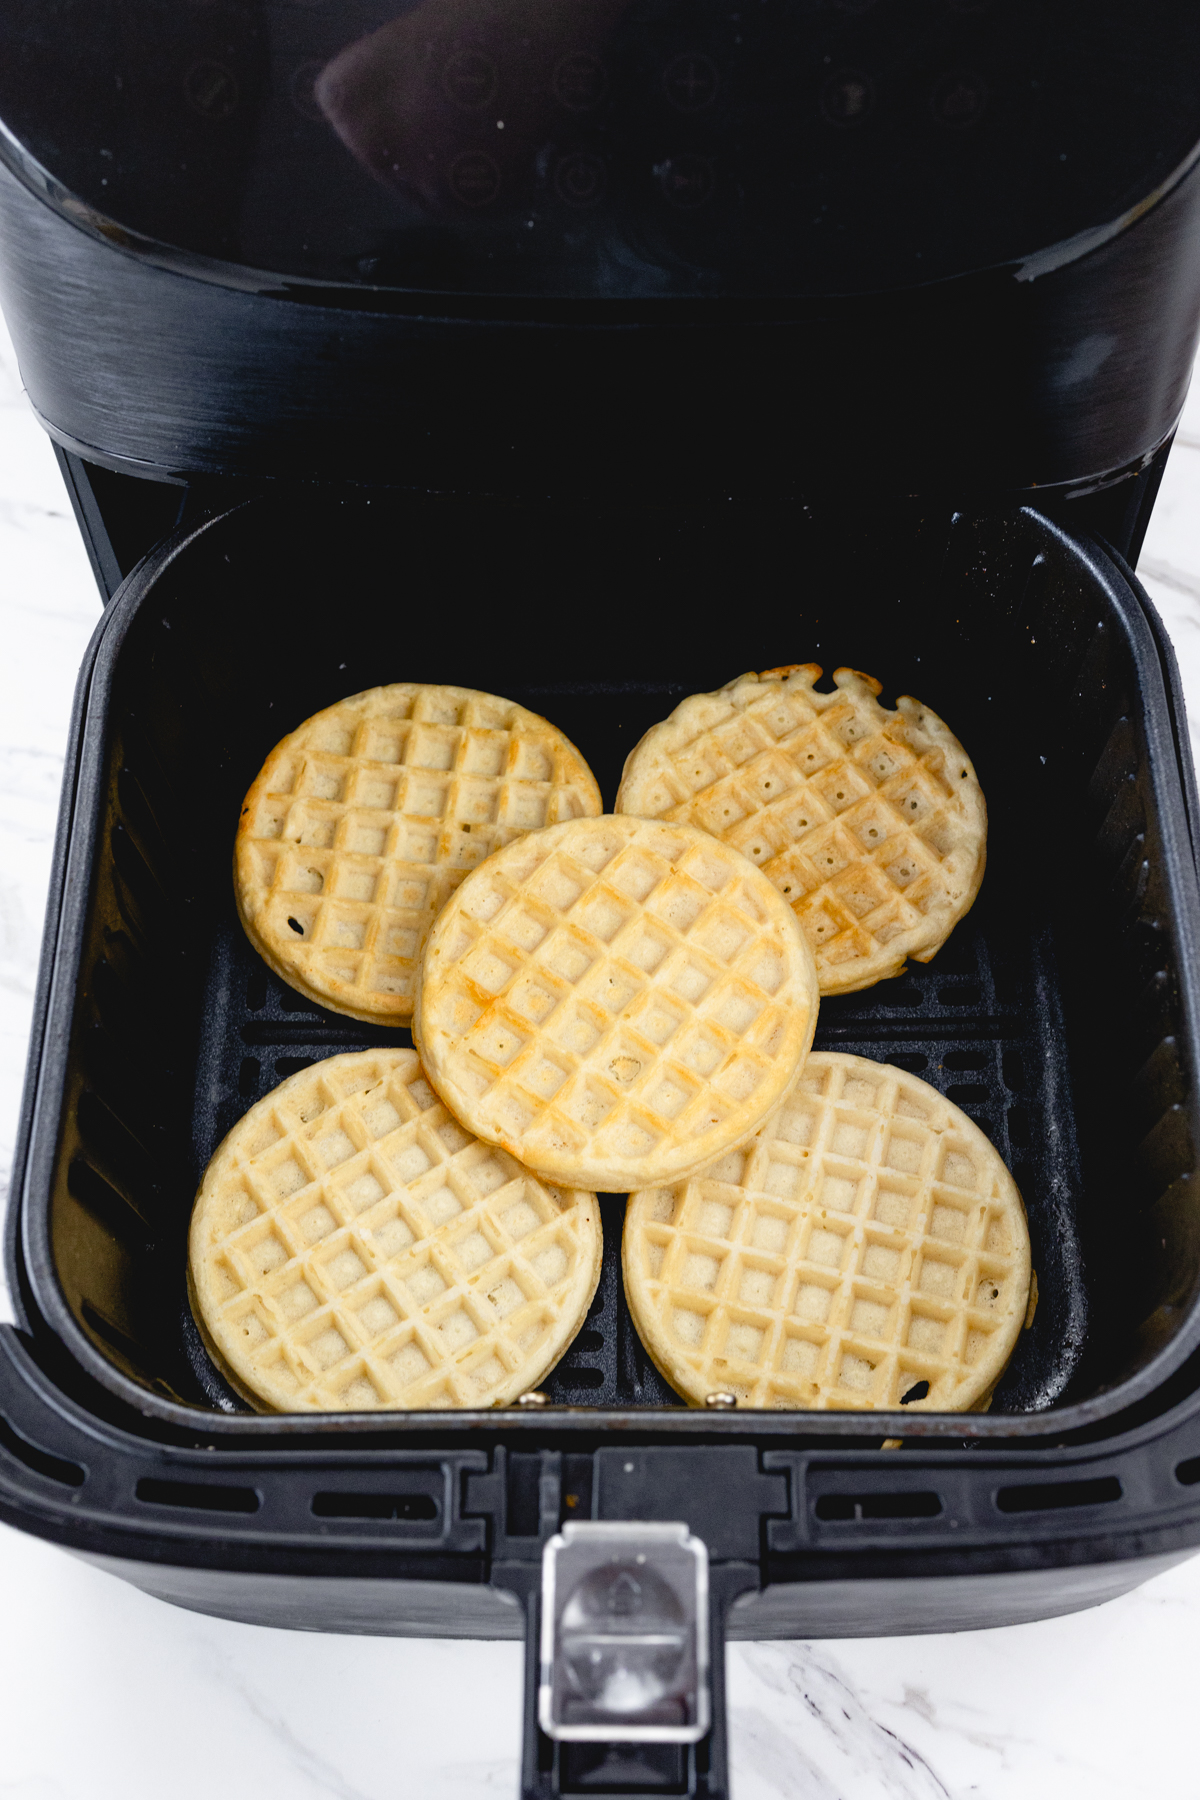 Top view of eggo waffles in an air fryer basket.